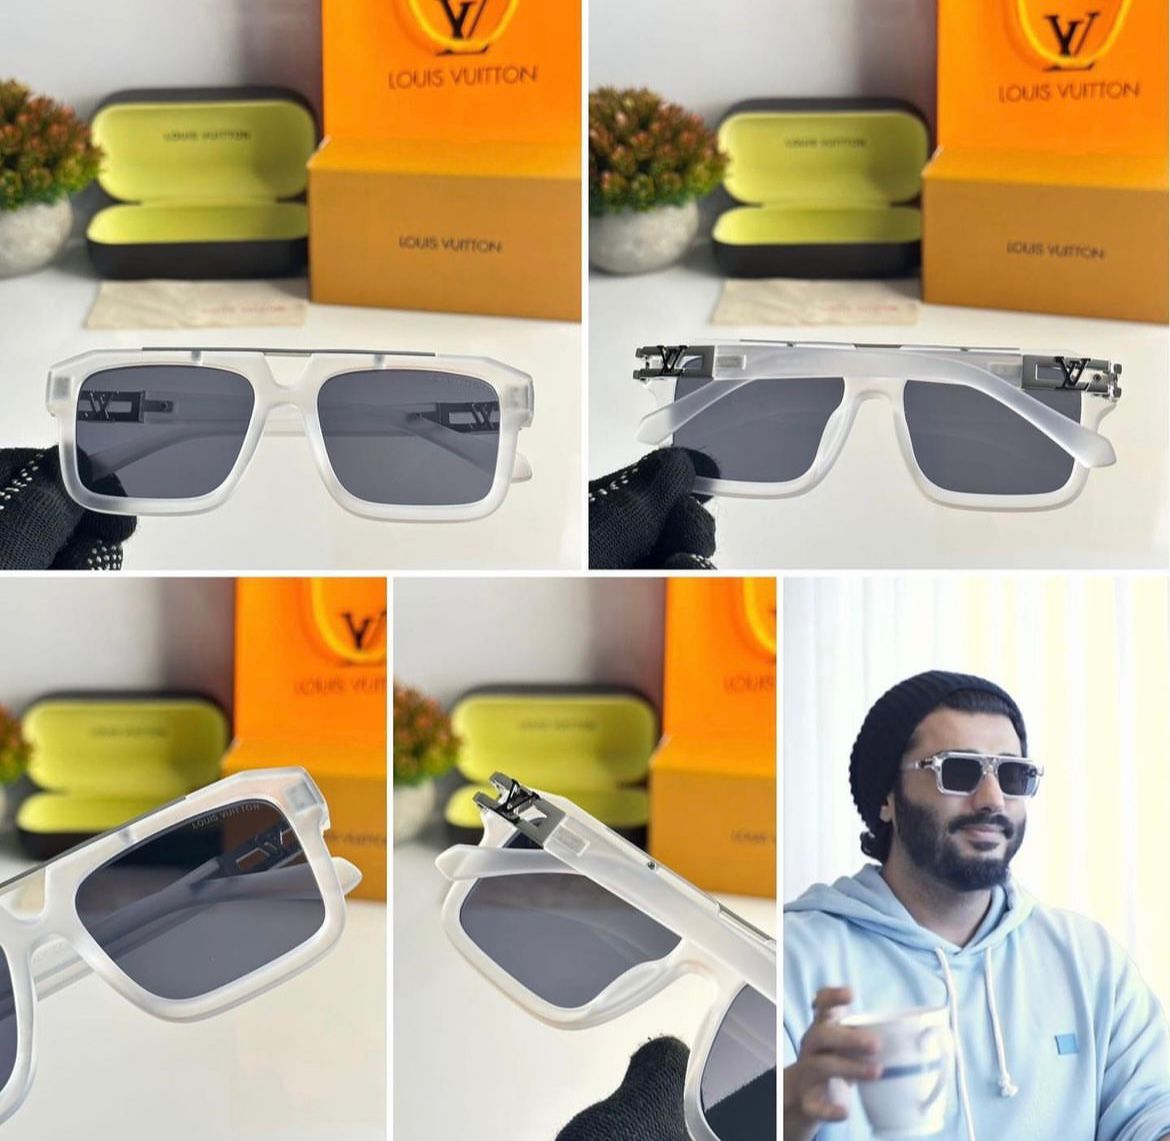 LUIS VUITTON EYEGLASSES - Sunglasses Villa